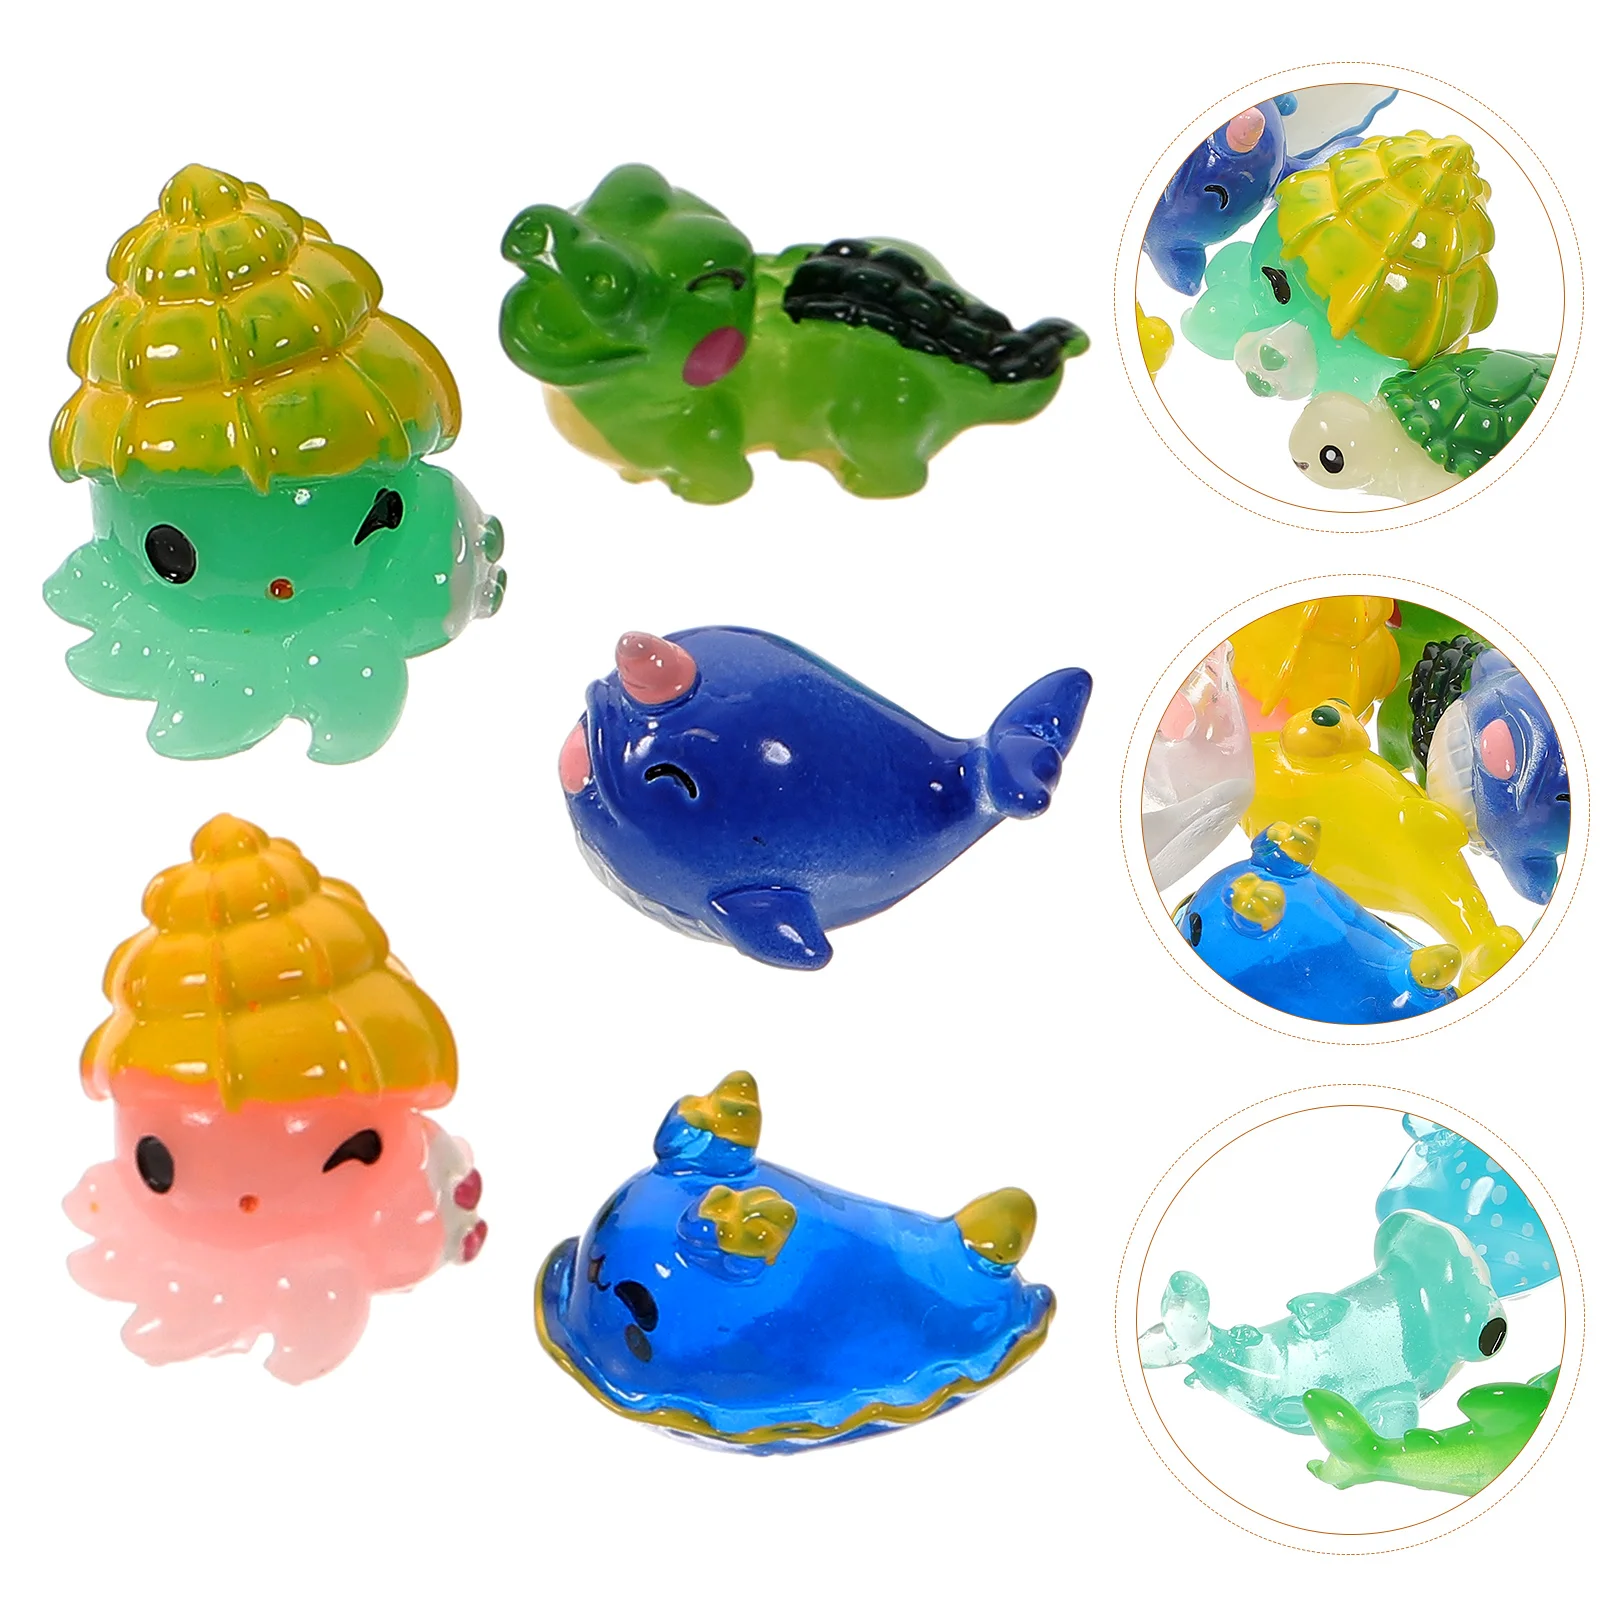 

15 Pcs Mini Animal Model Whale Toys Sea Animals Delicate Resin Decors Ocean Fish Tank Models Decorations Child Miniature